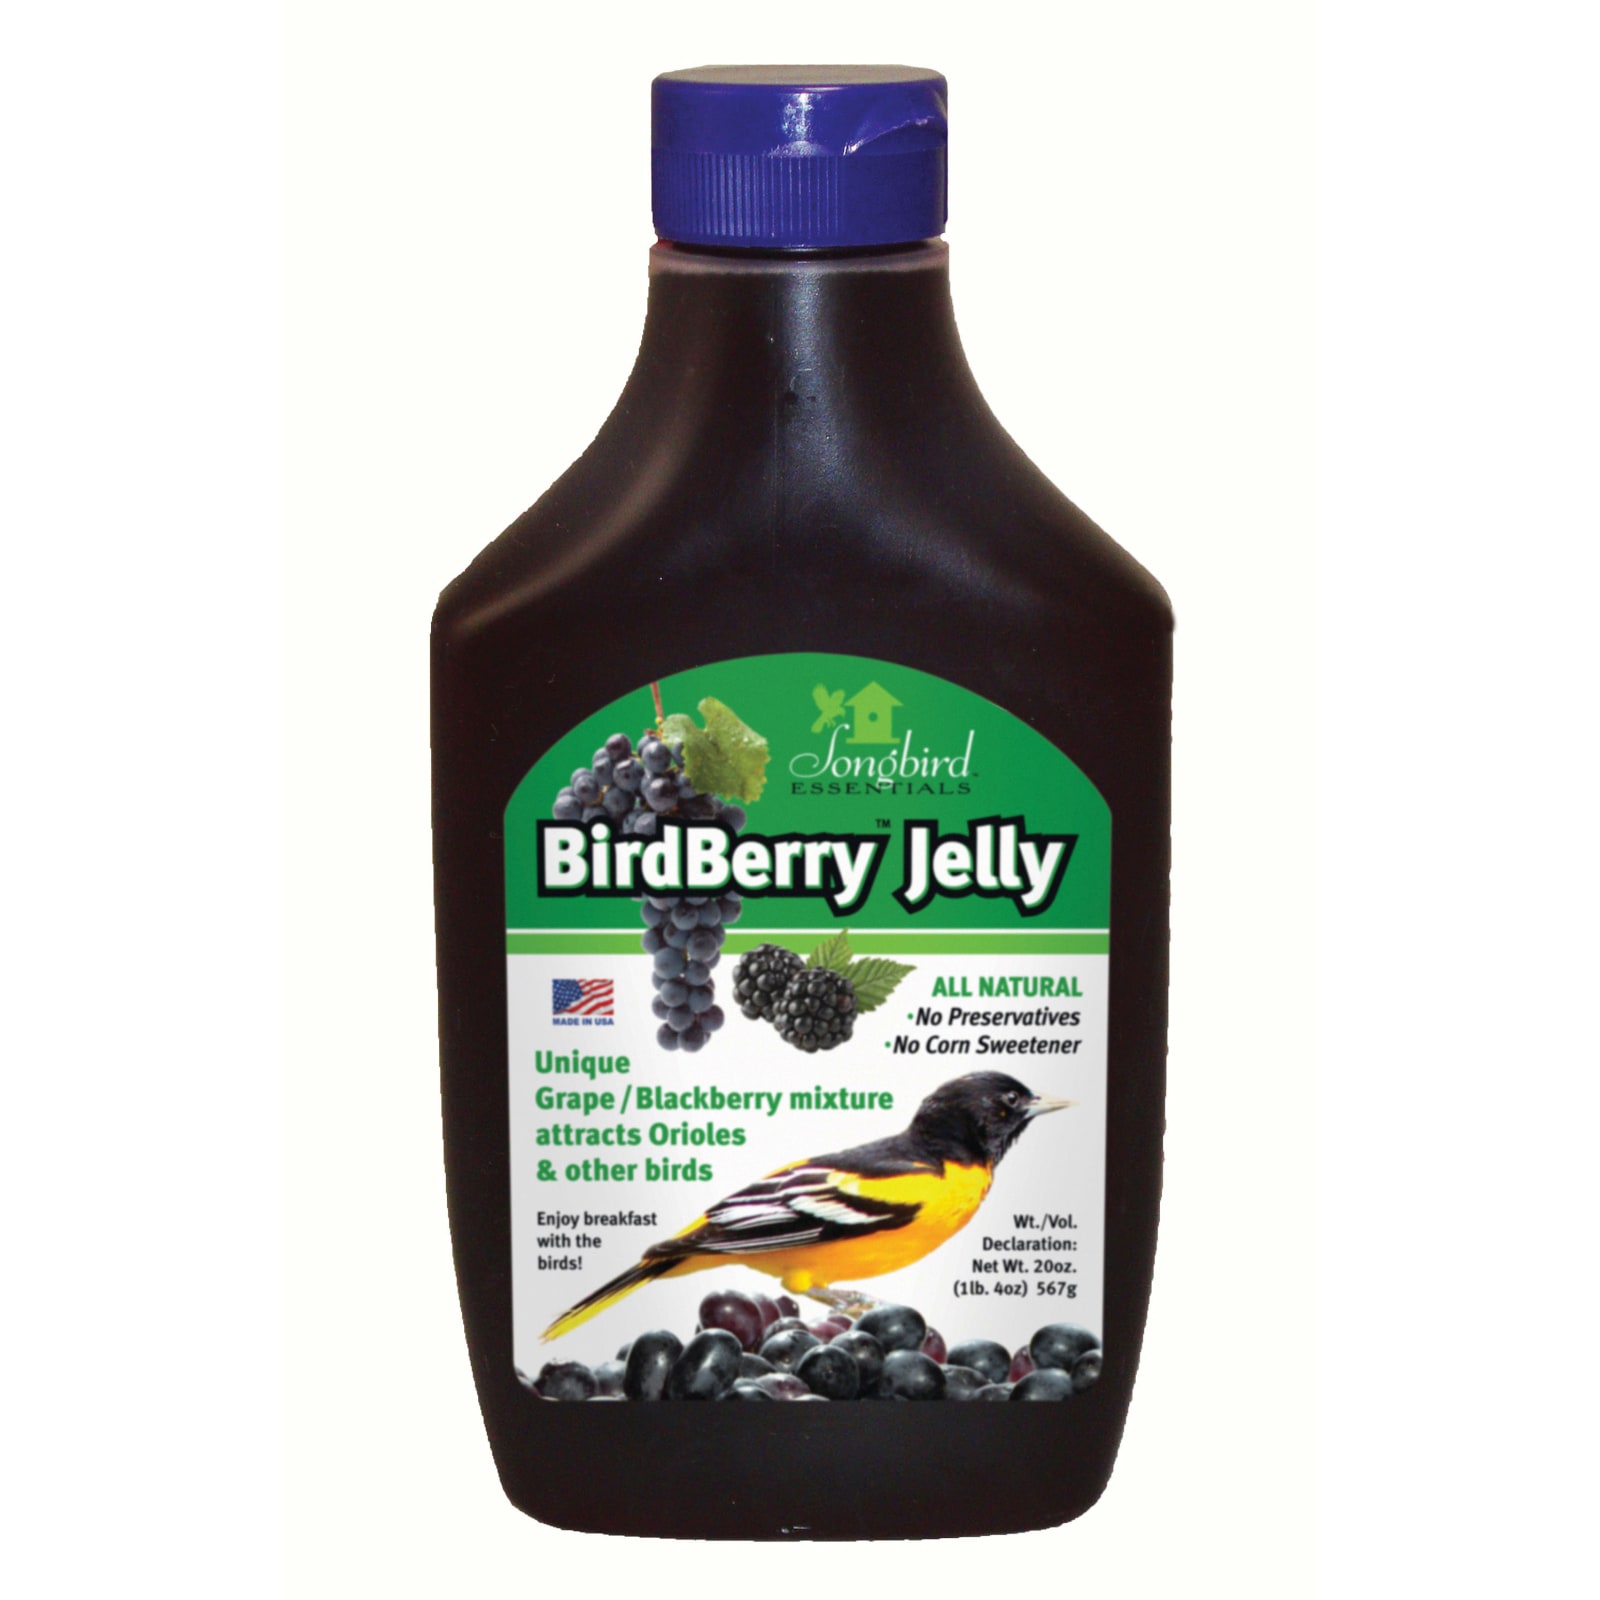 20 oz BirdBerry Jelly by Songbird Essentials at Fleet Farm